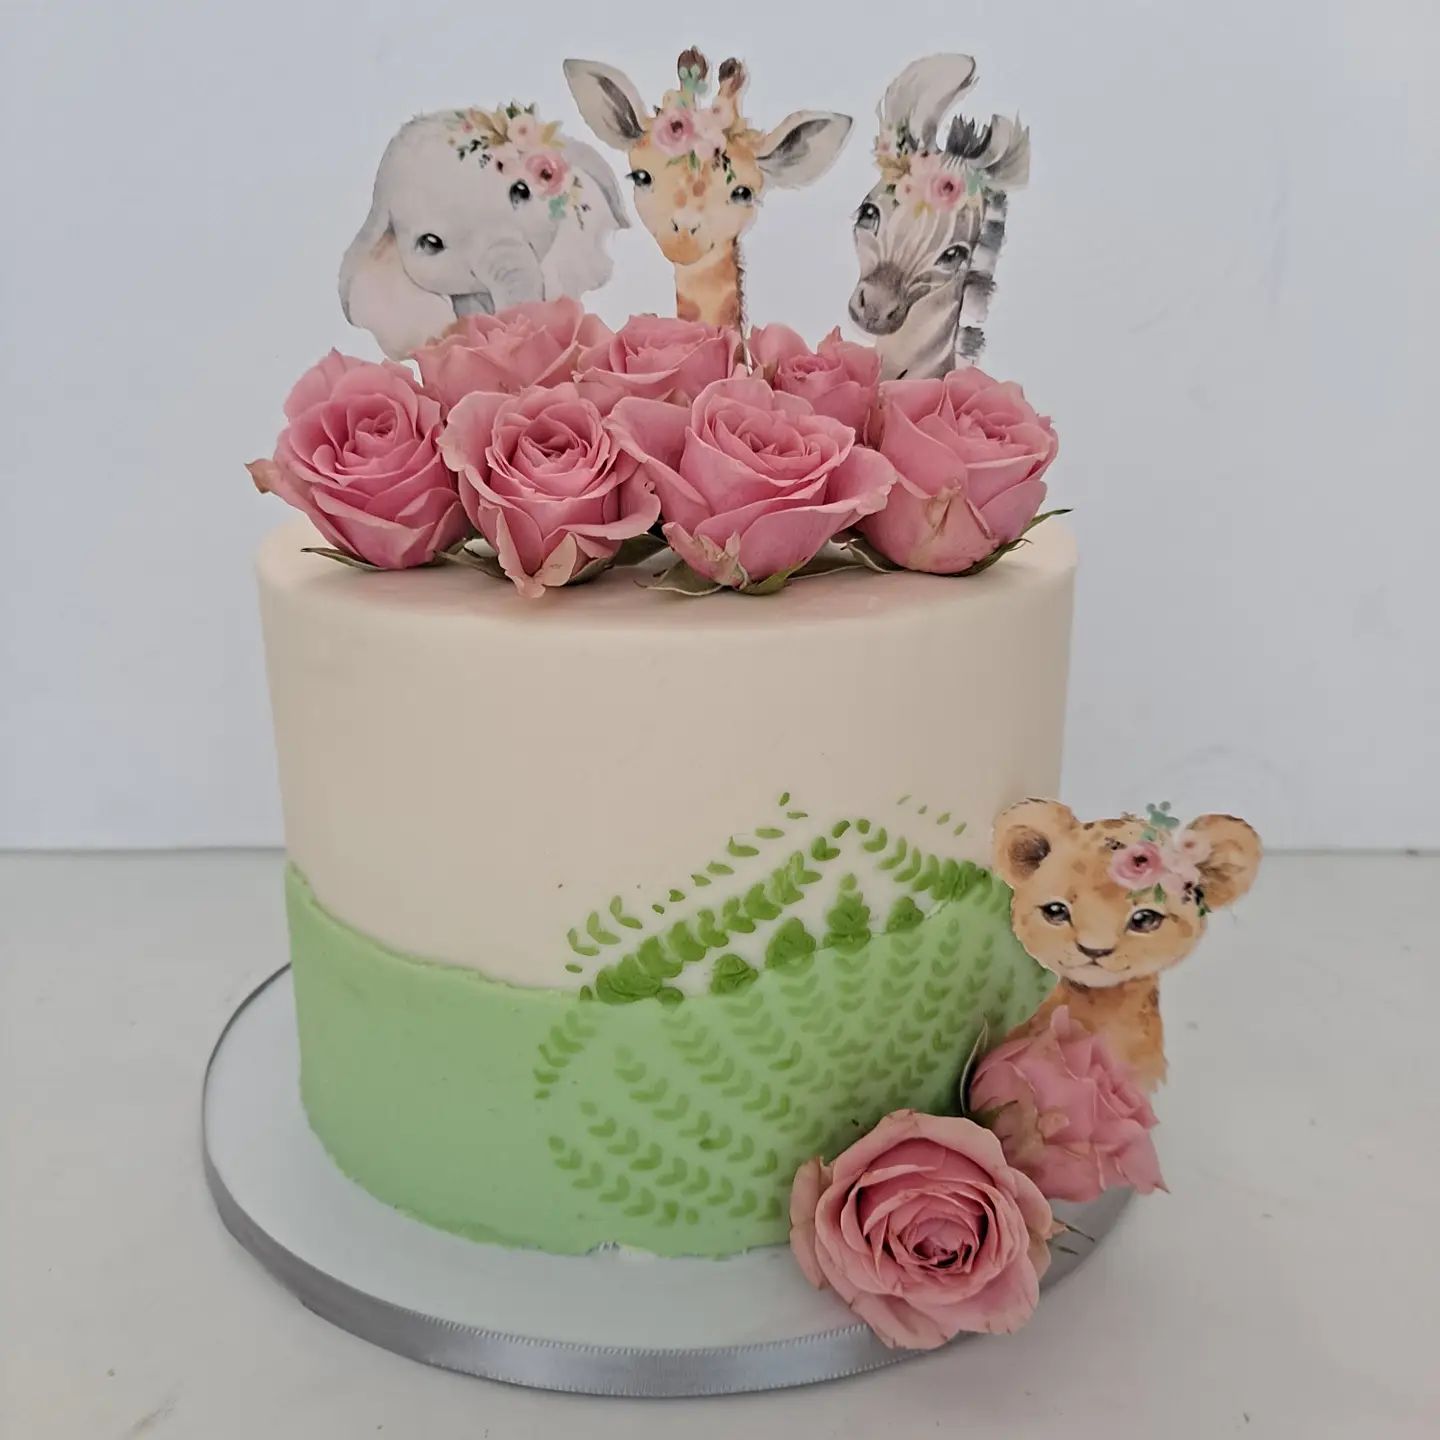 Happy Tiers Cake Designs - Safari Themed Baby Shower Cake | Facebook